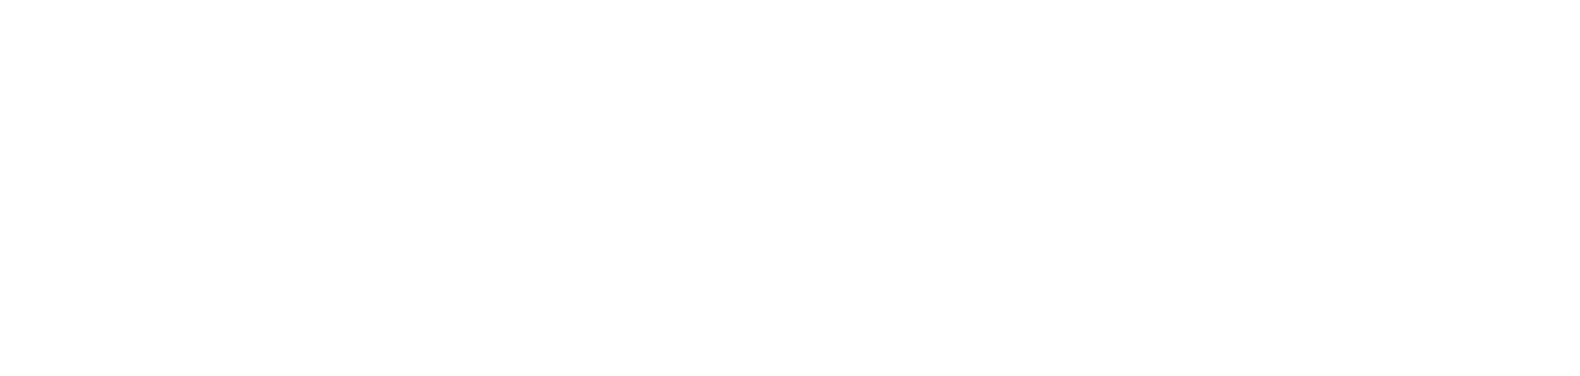 Enerpac Tool Group
 logo grand pour les fonds sombres (PNG transparent)